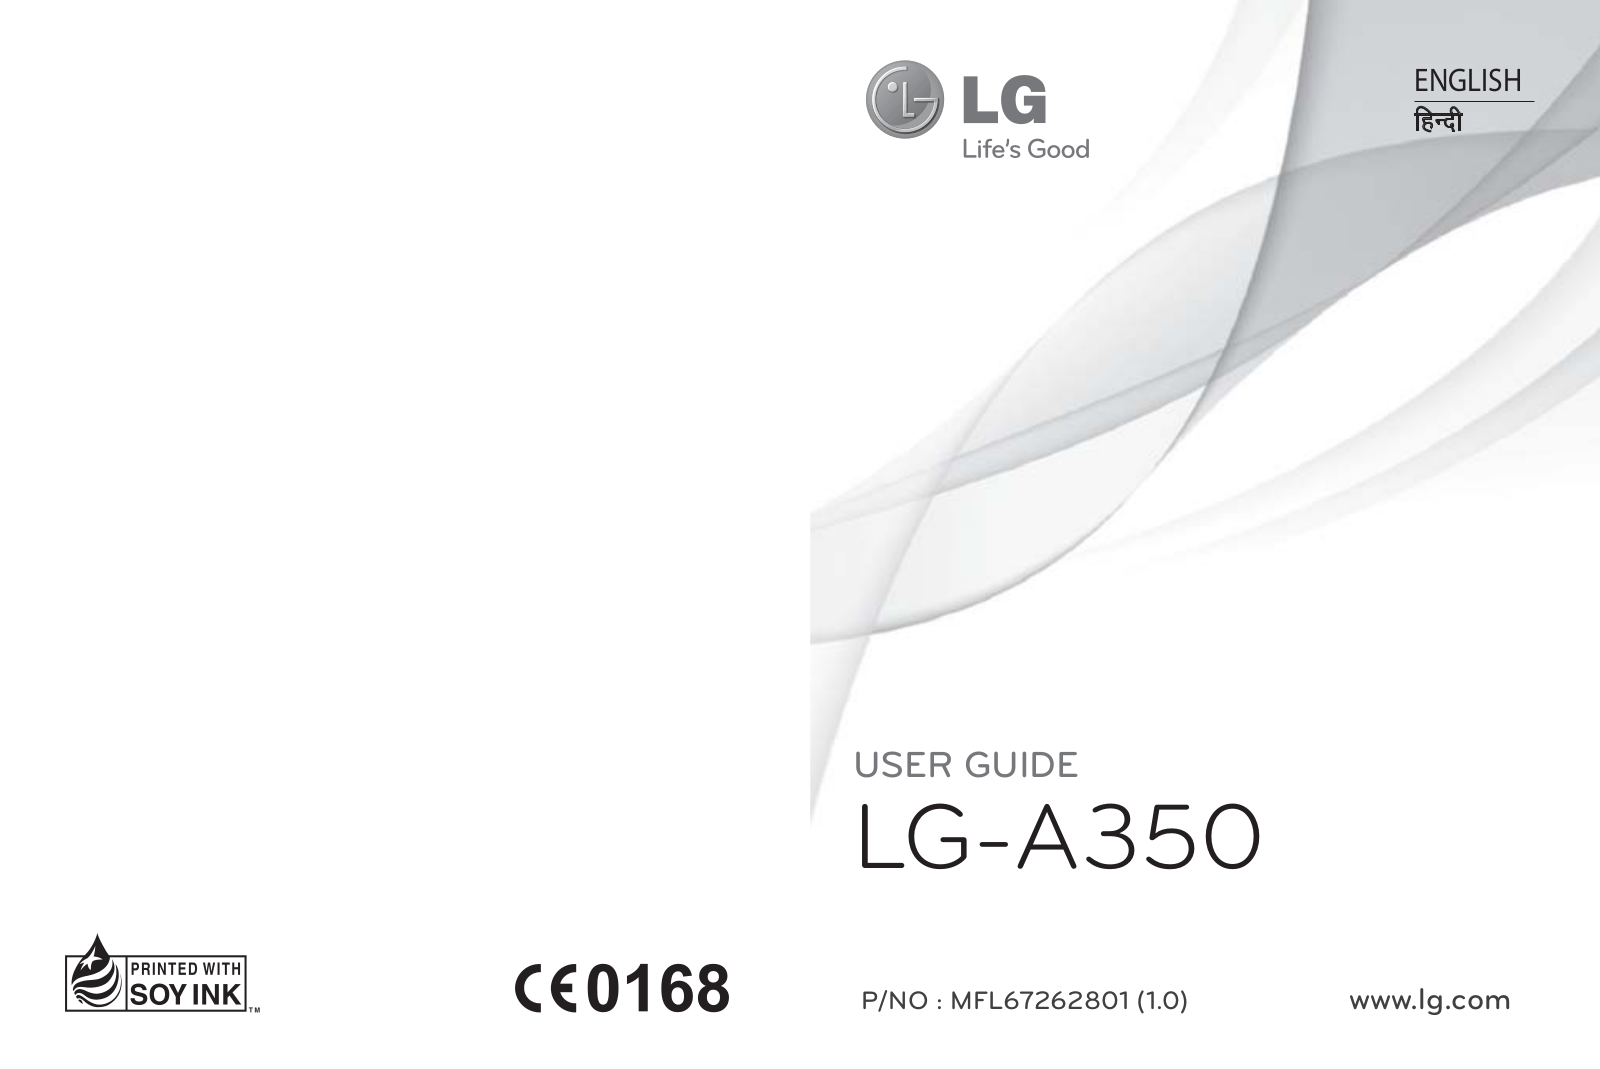 LG LG-A350 User Guide